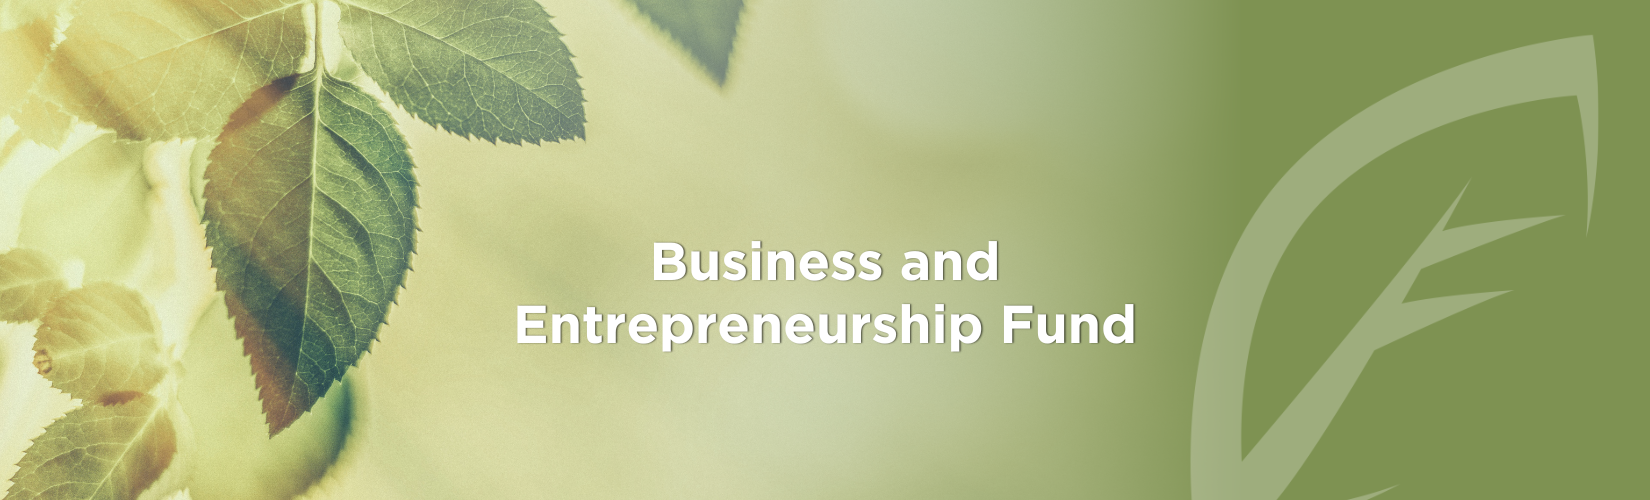 Business and Entrepreneurship Fund